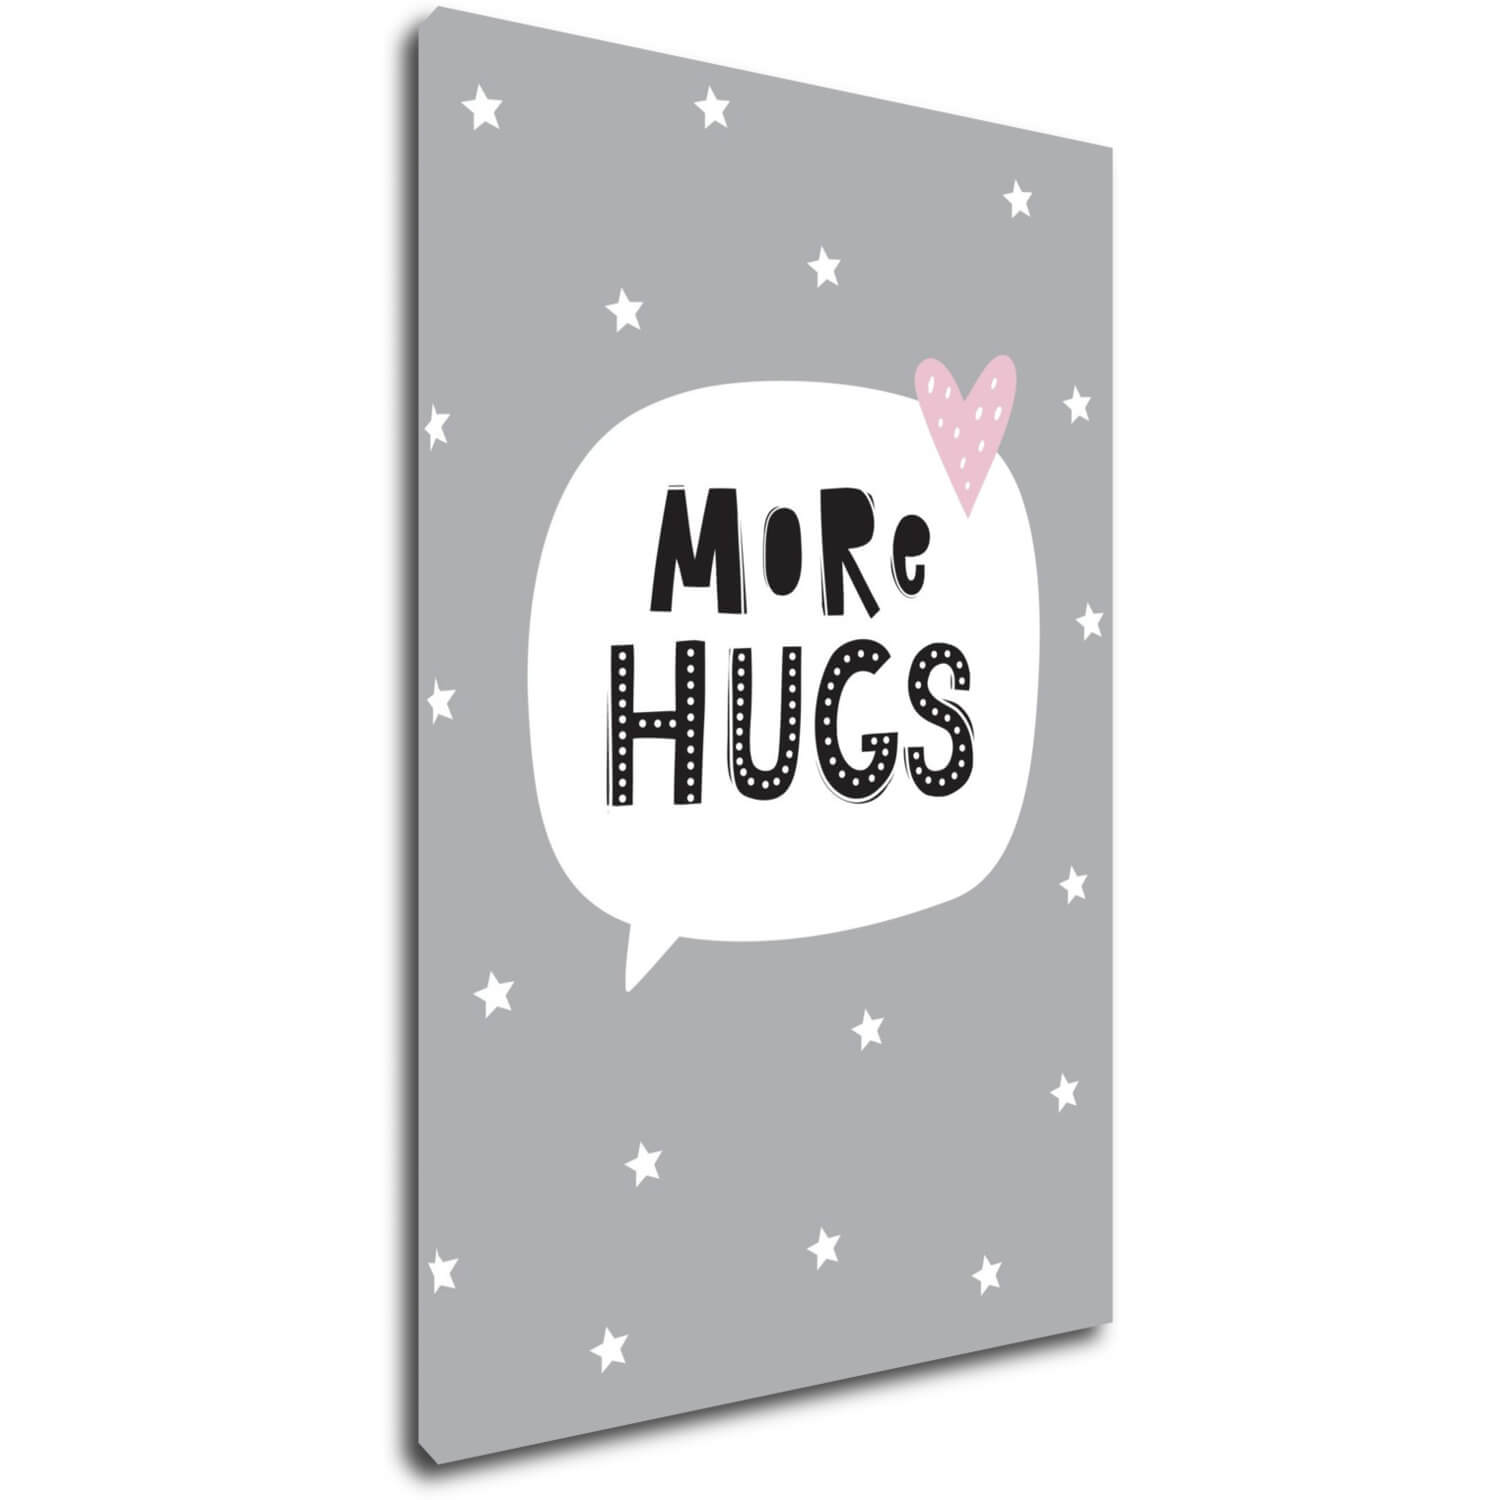 Obraz More hugs šedý - 40 x 60 cm